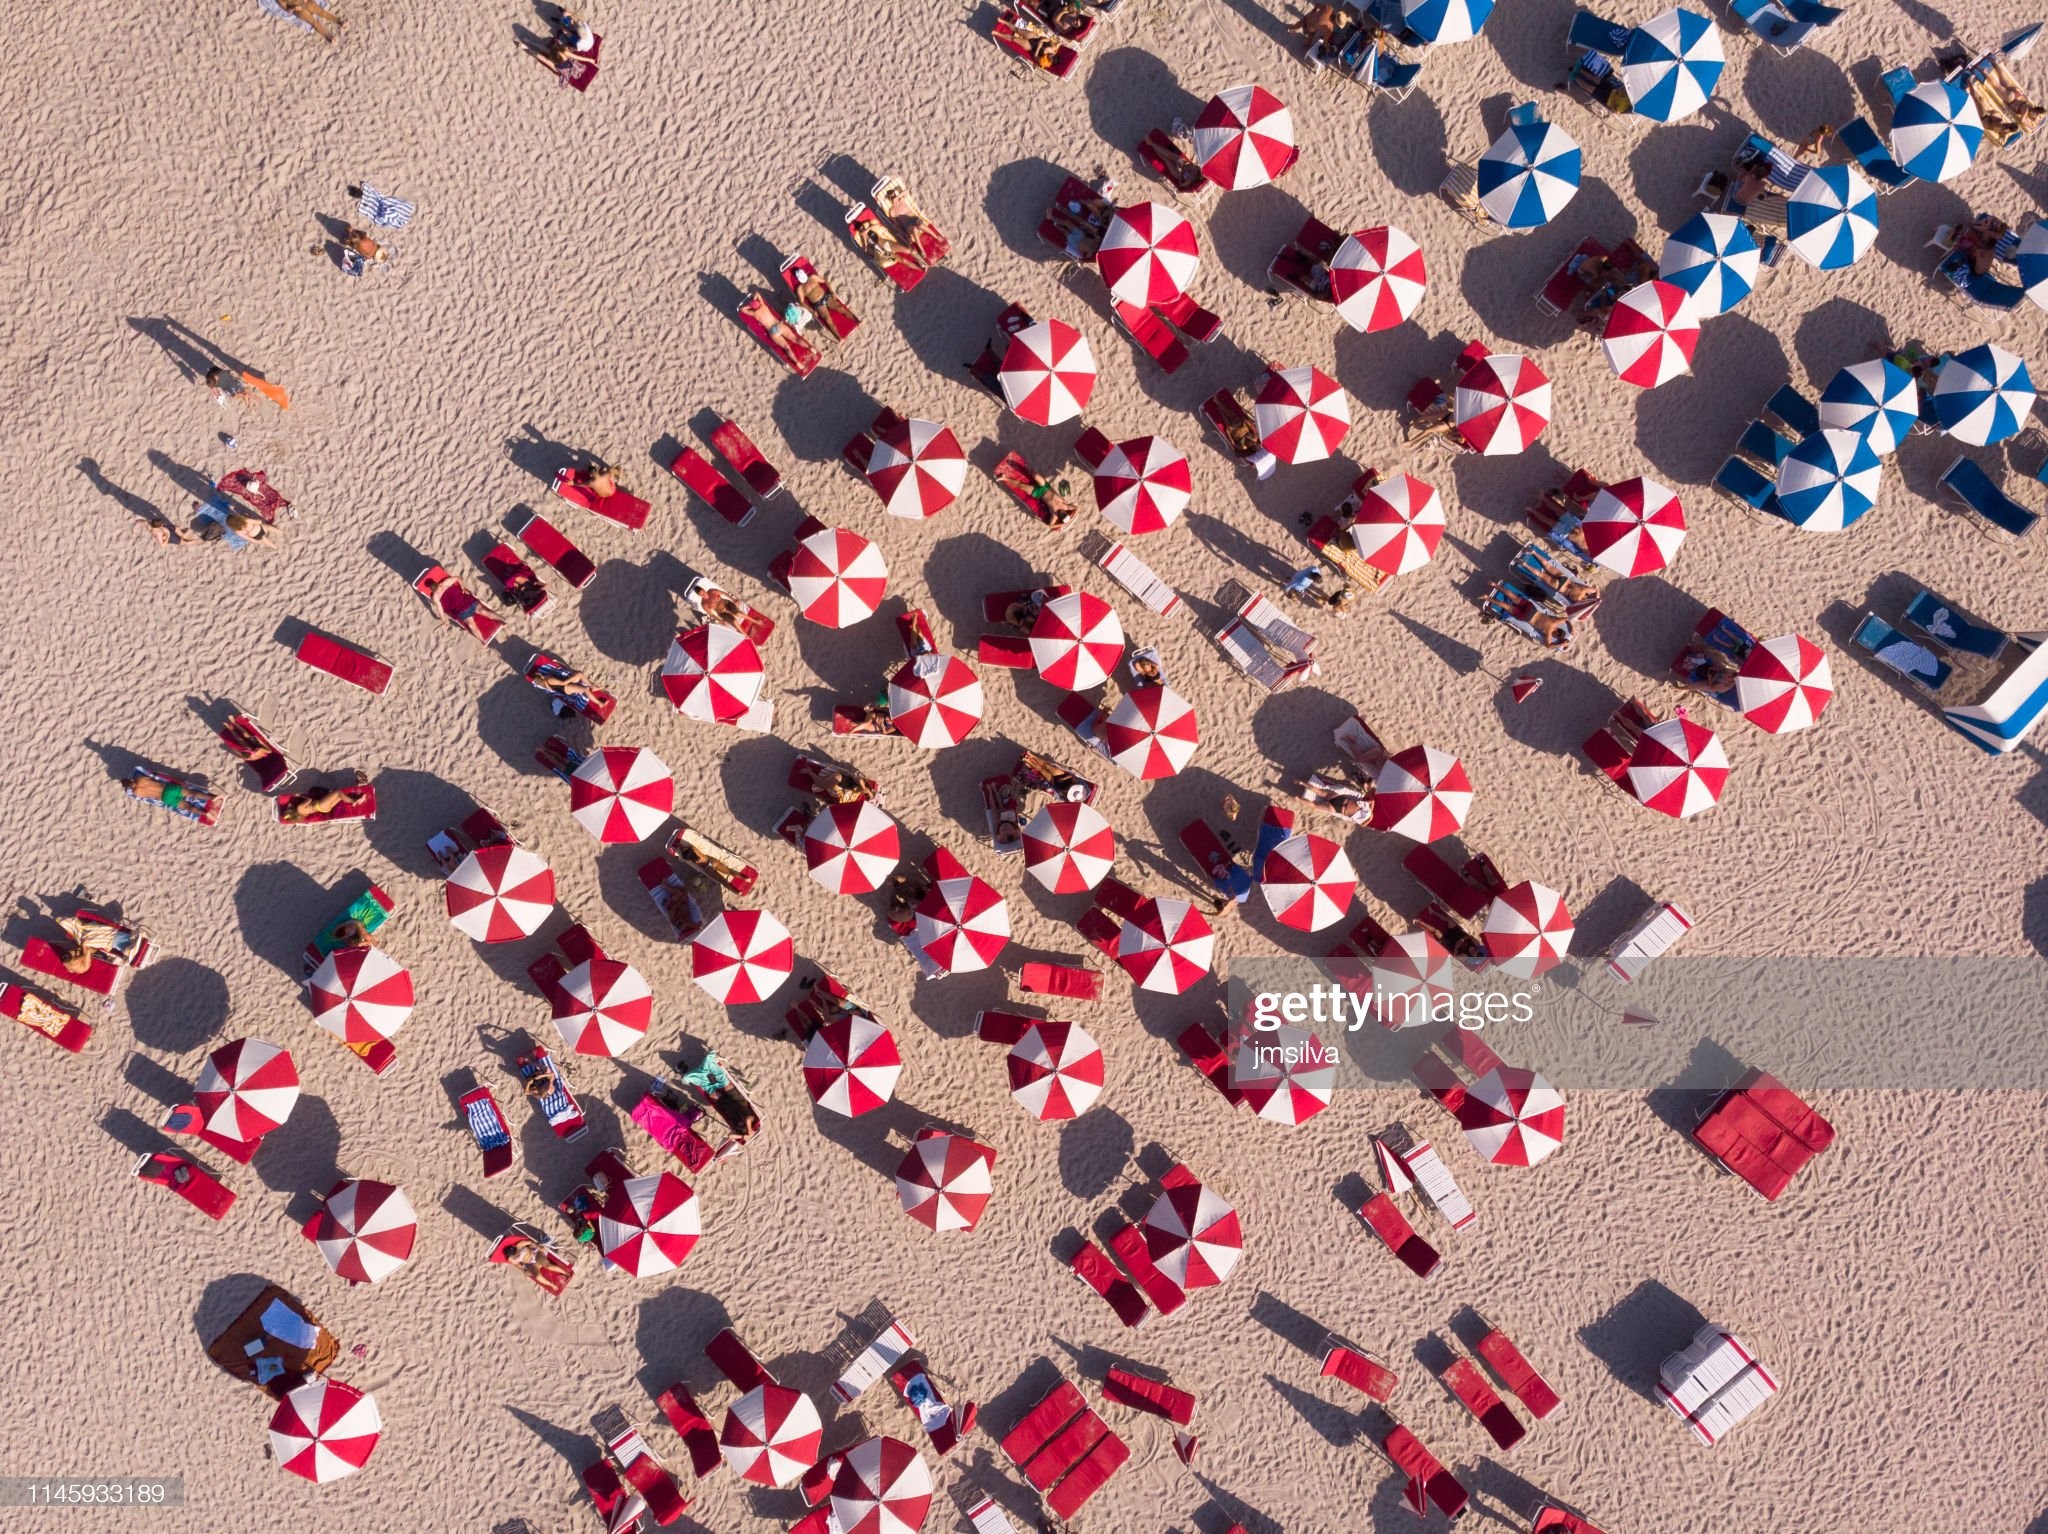 Crowd sunbathing on the beach, South Beach, Florida, USA. 